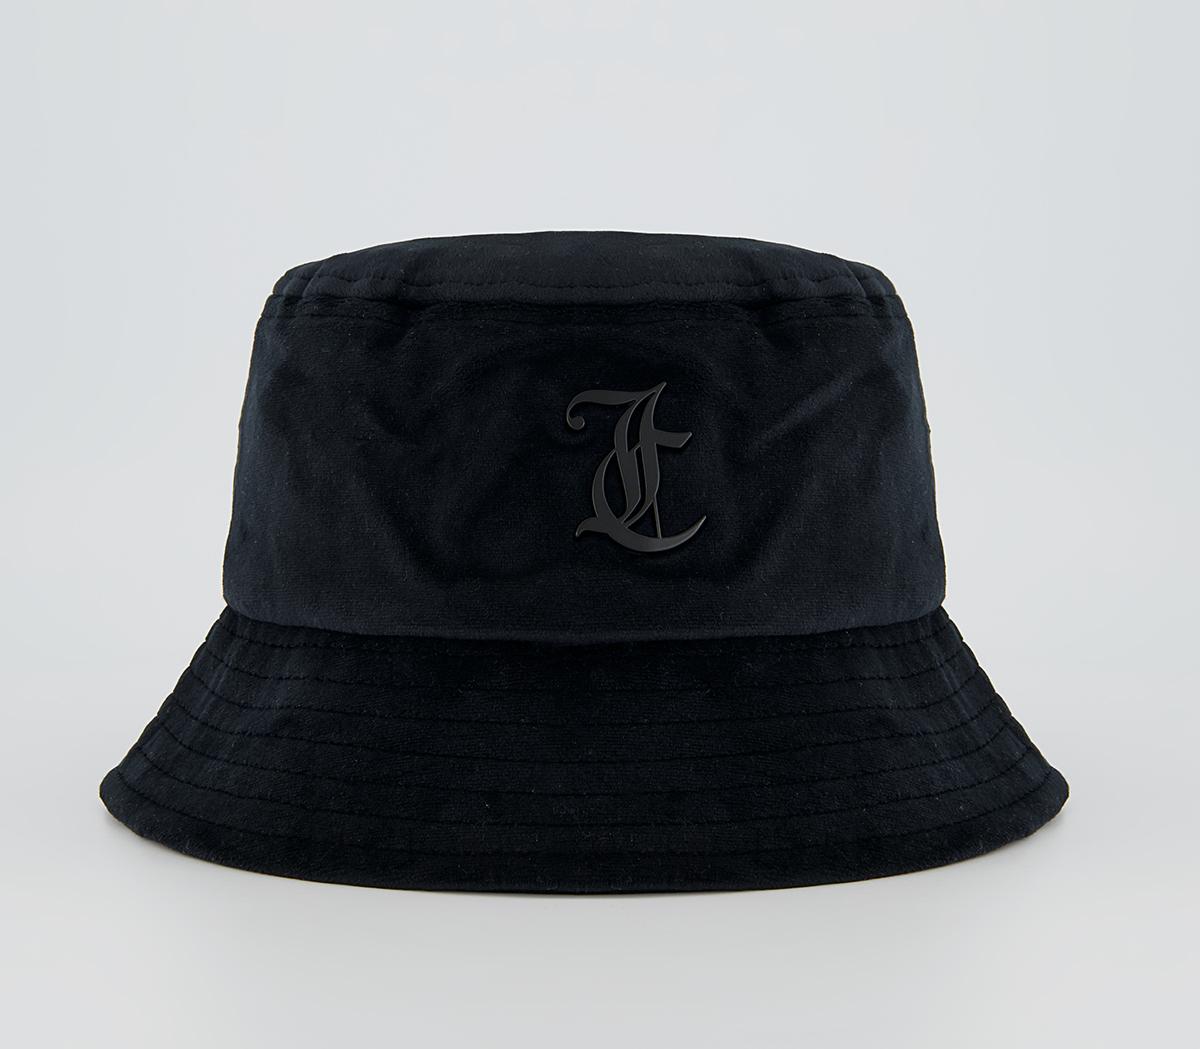 Juicy Couture Eleana Velour Bucket Hat Black - Caps And Hats